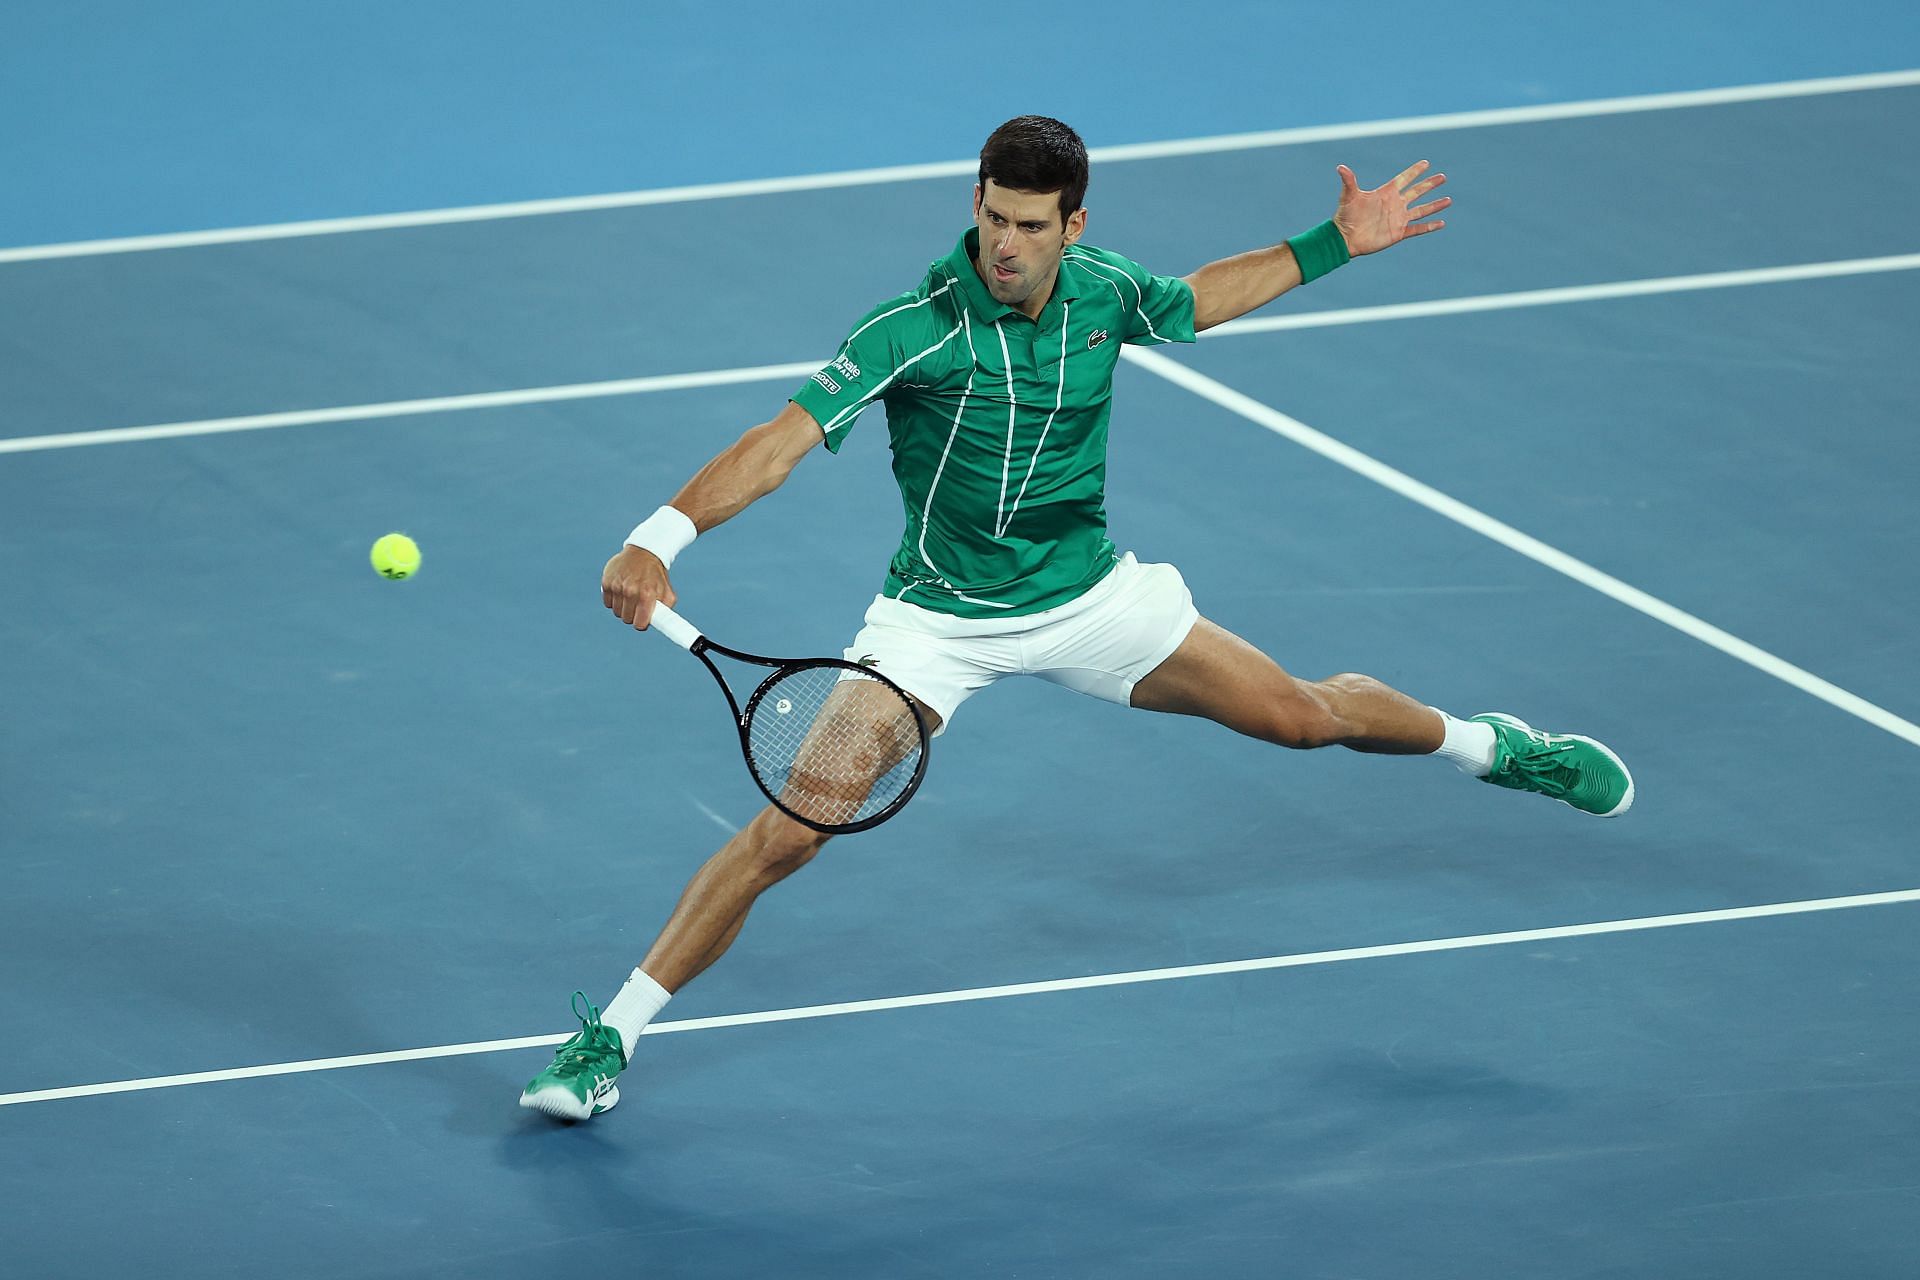 Novak Djokovic against Dominic Thiem in the final of the 2020 Australian Open